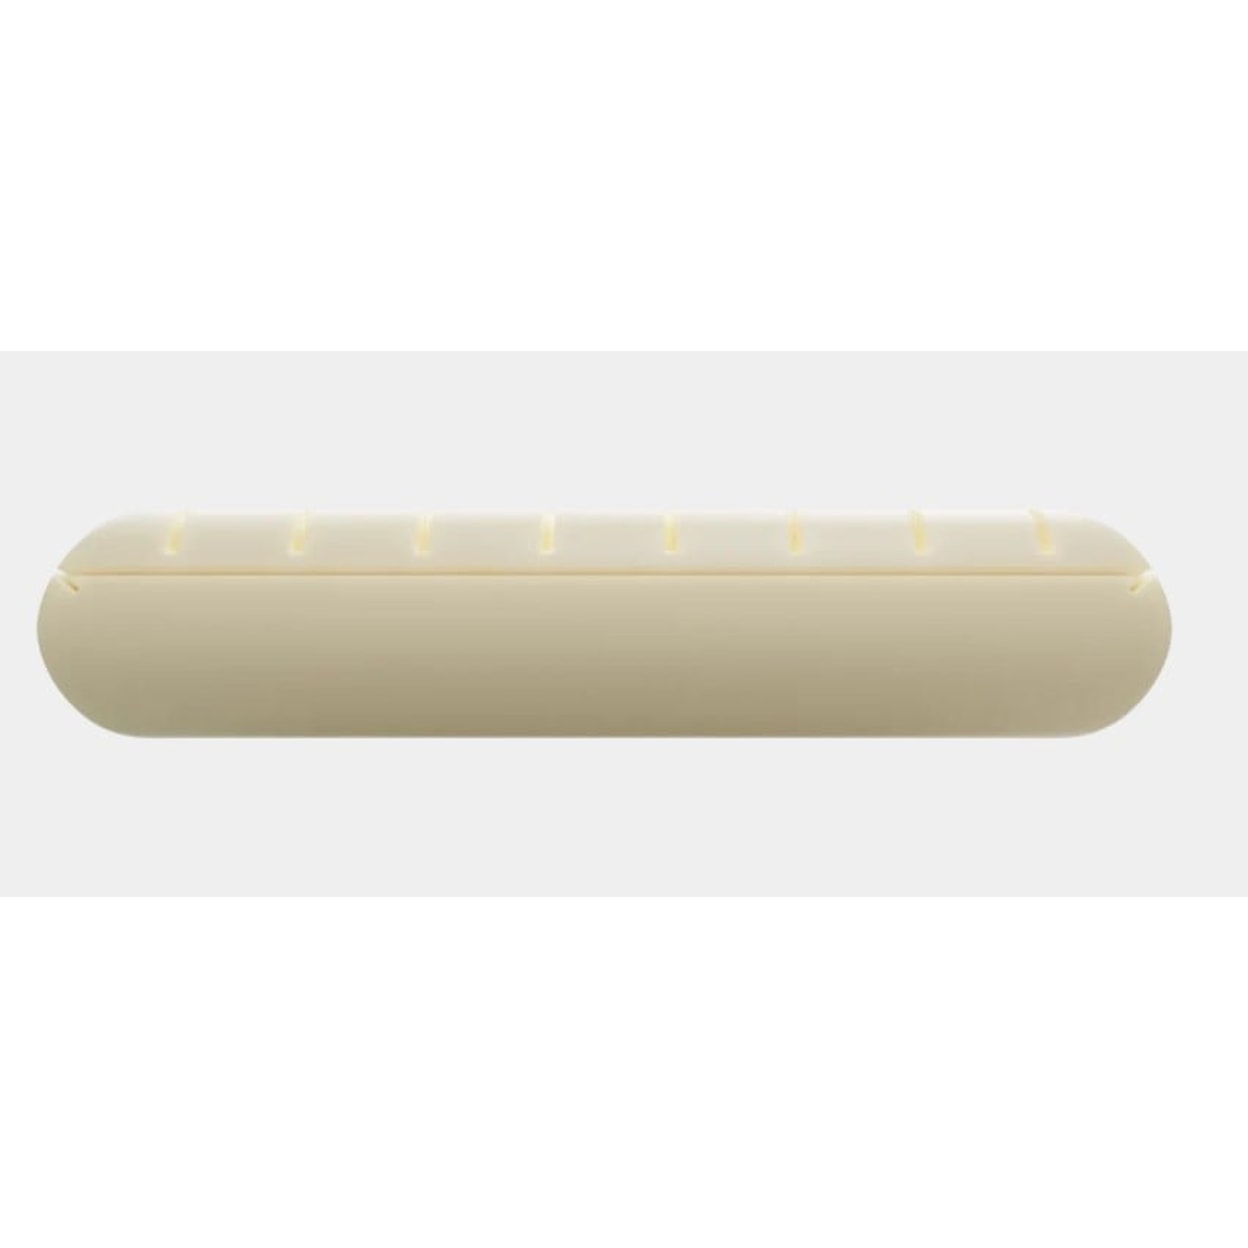 Blu Sleep Products Blu Sleep Pillows Queen Prestige Coconut Memory Foam Pillow